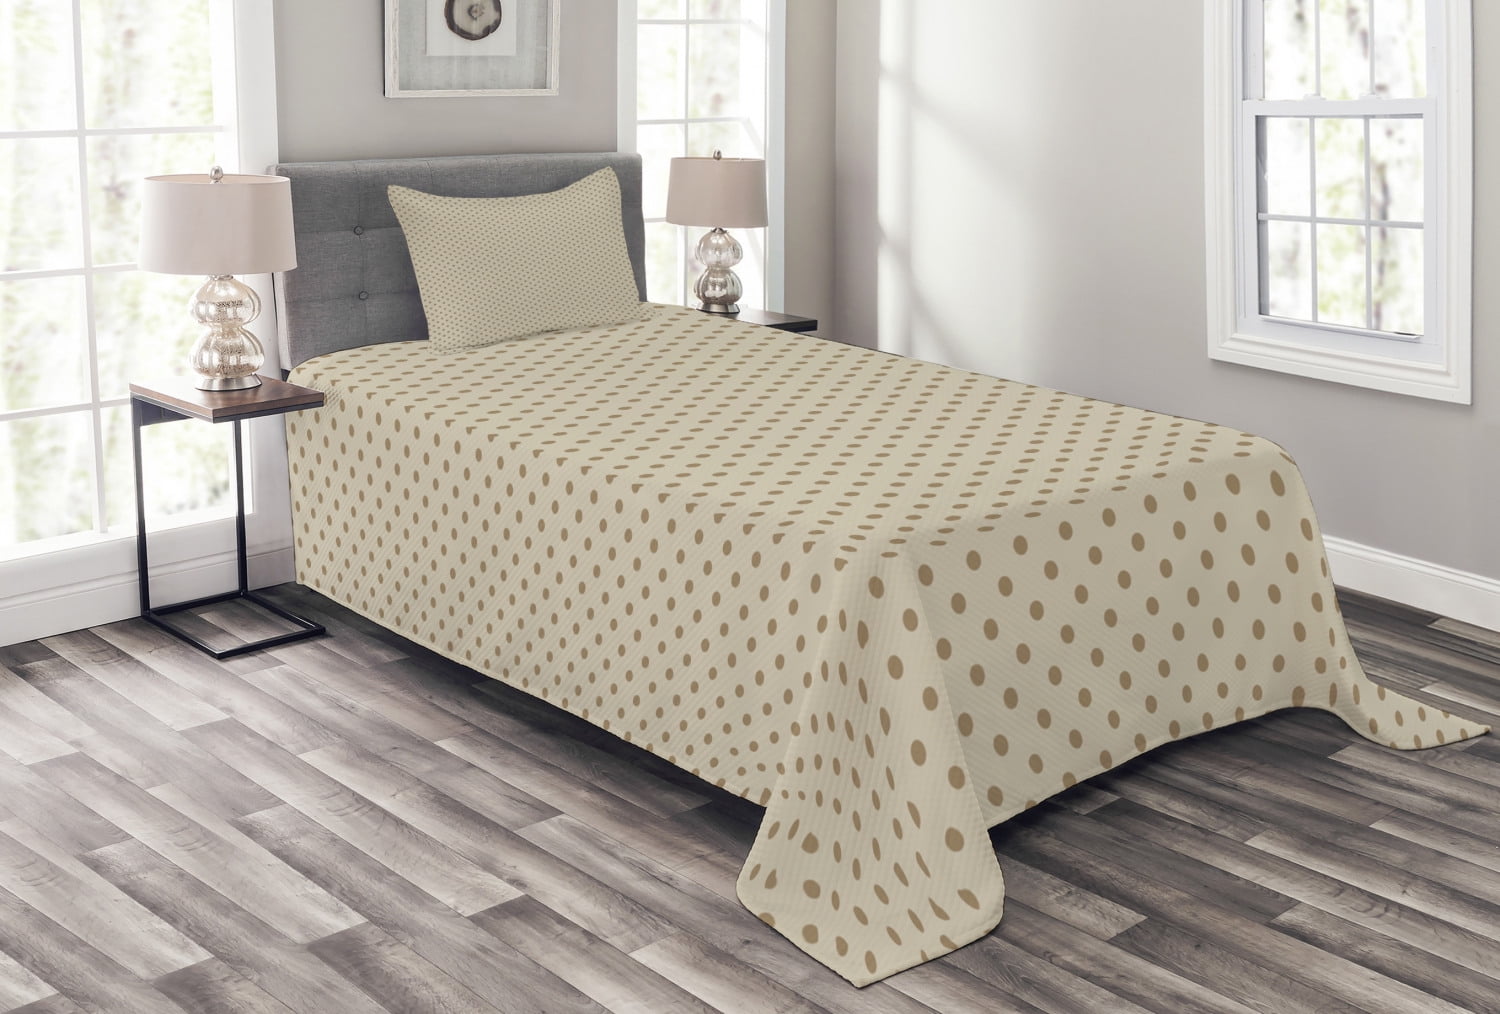 Details about   Chevron Quilted Bedspread & Pillow Shams Set Retro Zigzags Vertical Print